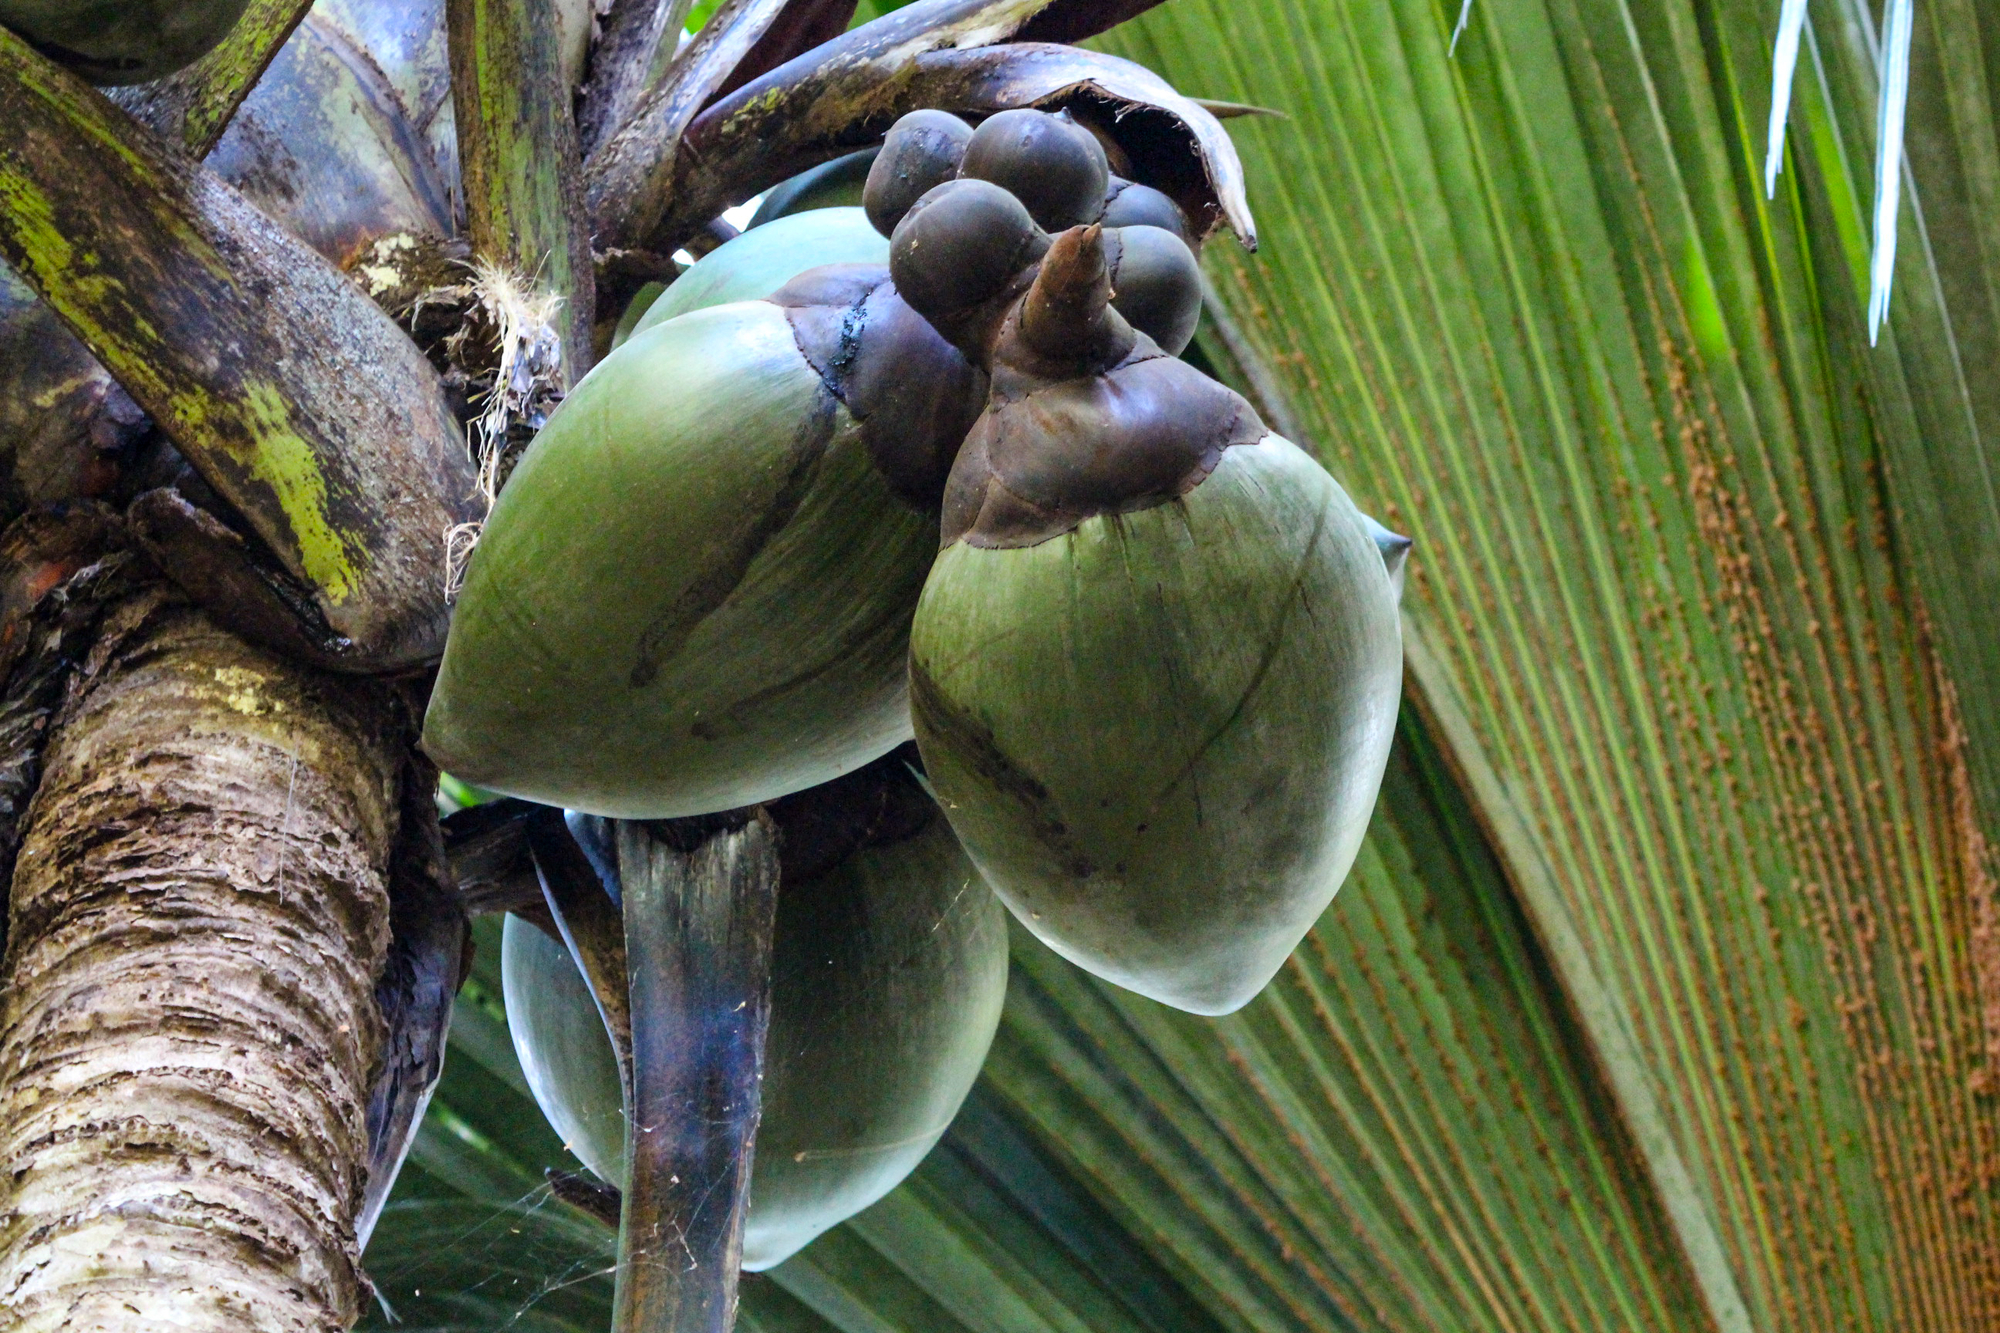 Coco de mer fruit at a seychelles palm tree in UNESCO world natural heritage Vallee de Mai on island praslin